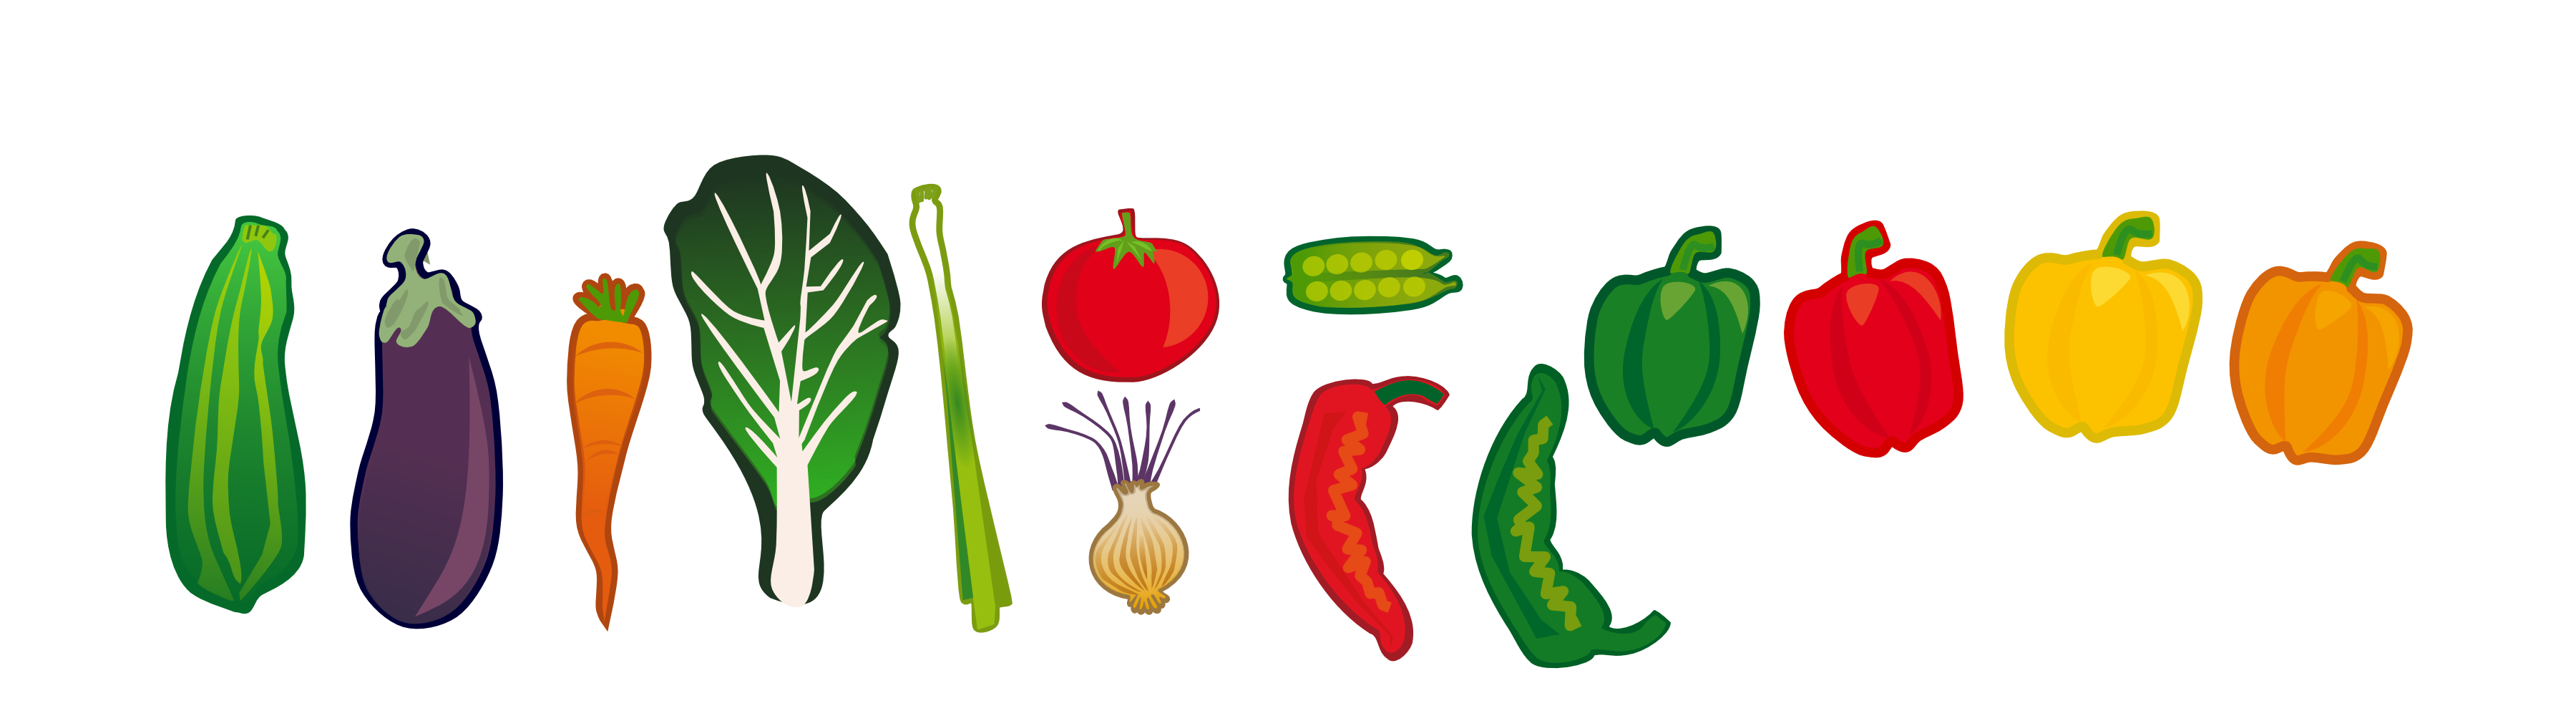 clipart cartoon vegetables - photo #14